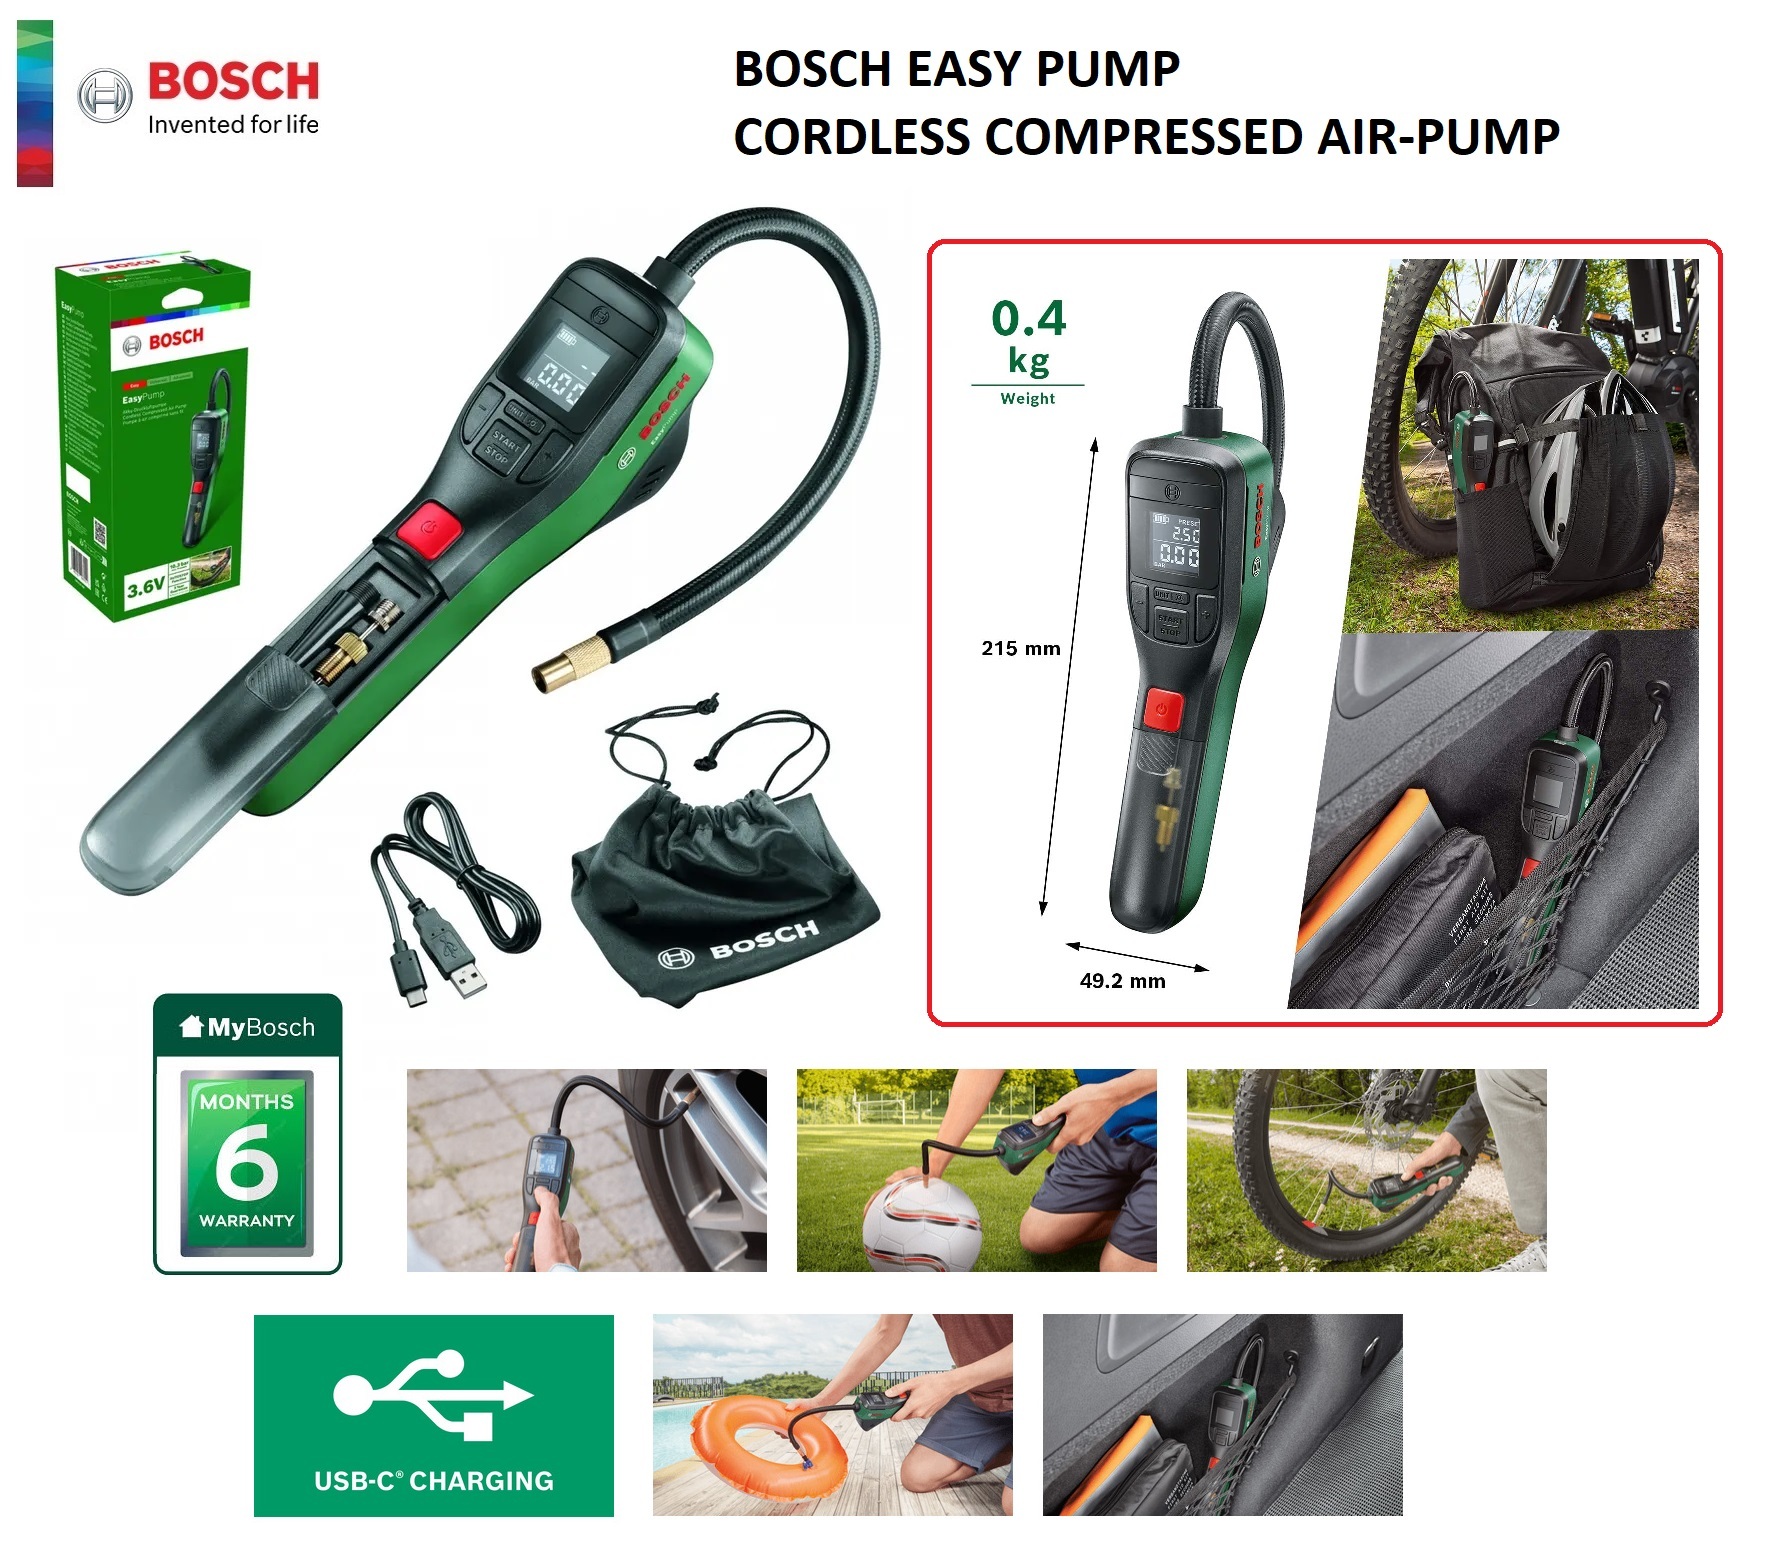 Bosch EASYPUMP 3.6v Cordless Air Pump with Light